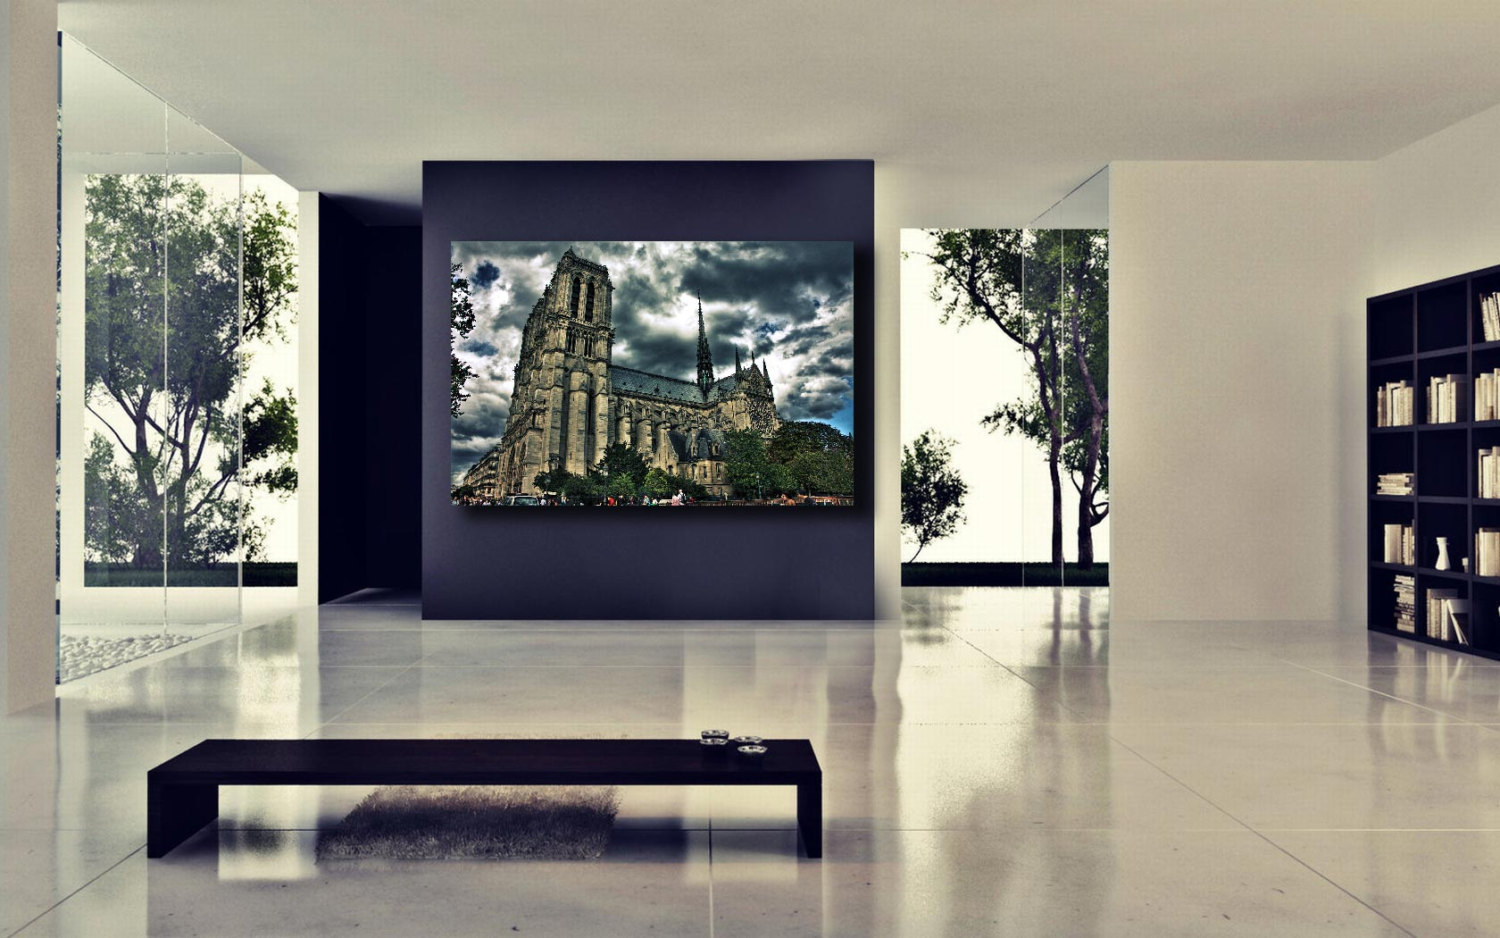 Gallery wrap, Gargoyle, Notre Dame Cathedral, Paris decor, Paris France, eiffel Tower, Europe, Black and White photogrphy, HDR photograph